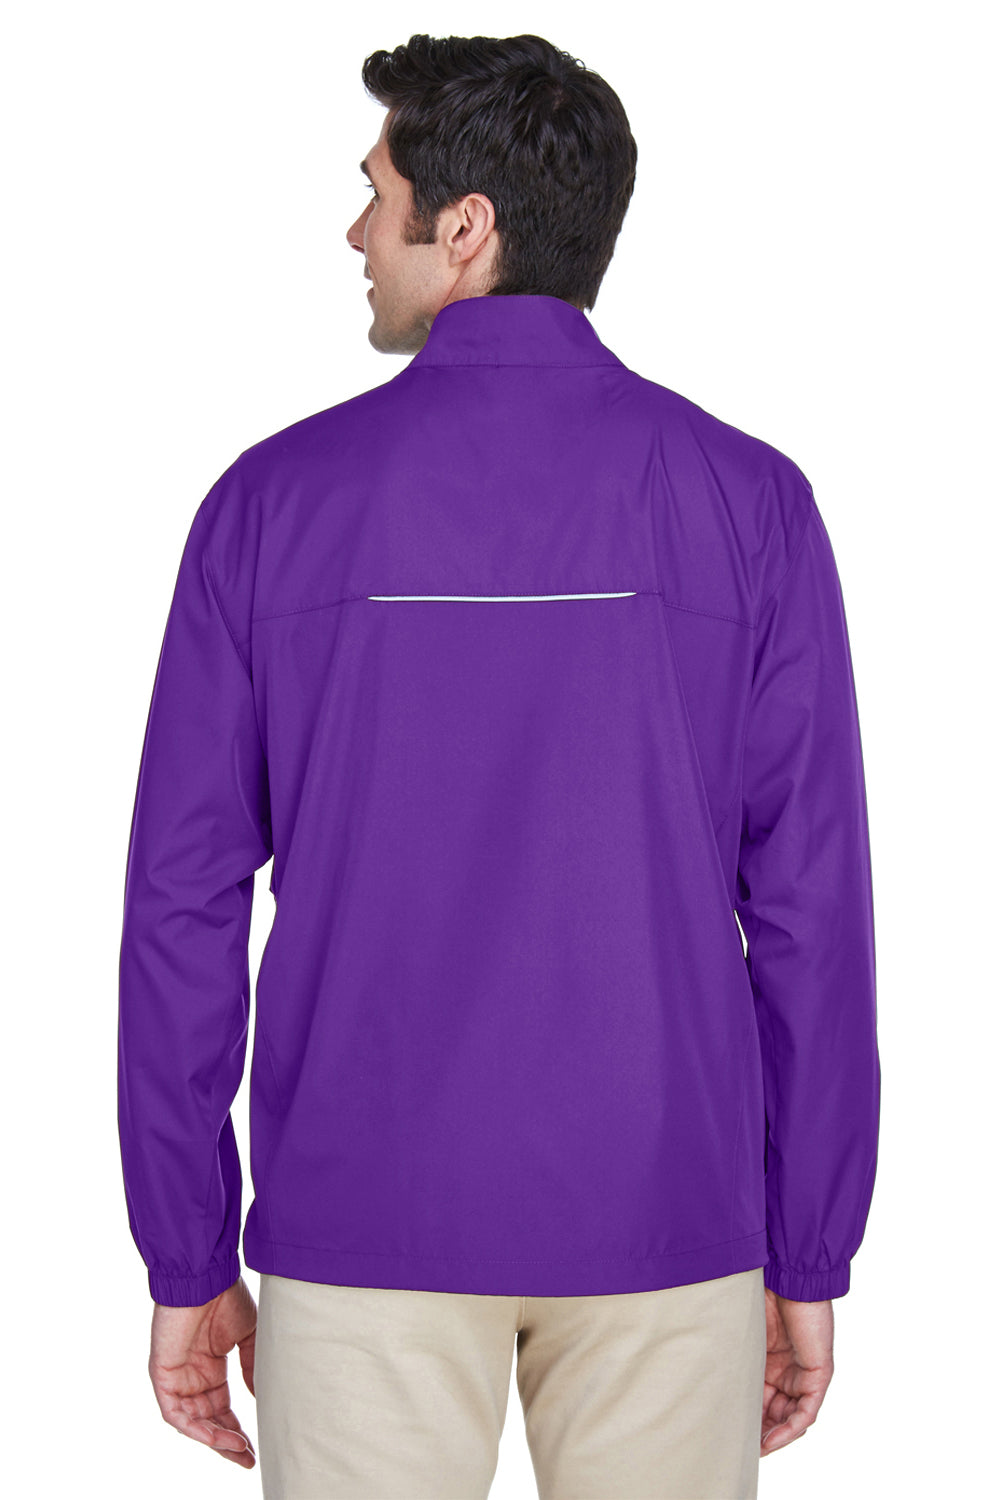 Core 365 88183 Mens Motivate Water Resistant Full Zip Jacket Purple Back